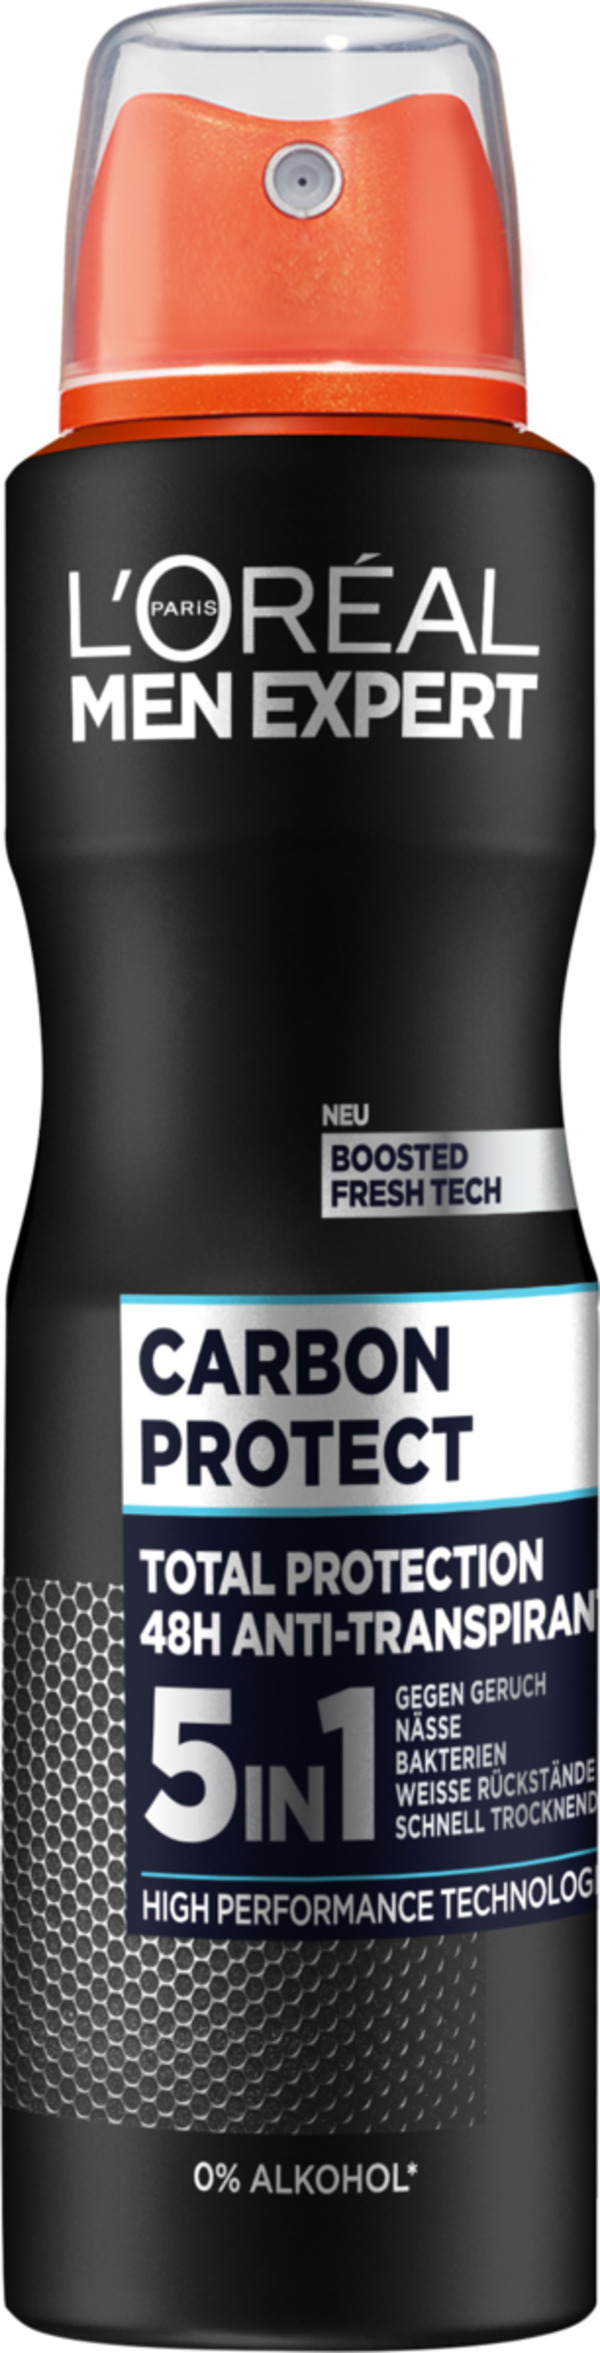 Bild 1 von L’Oréal Paris men expert Anti-Transpirant Spray Carbon Protect 5in1